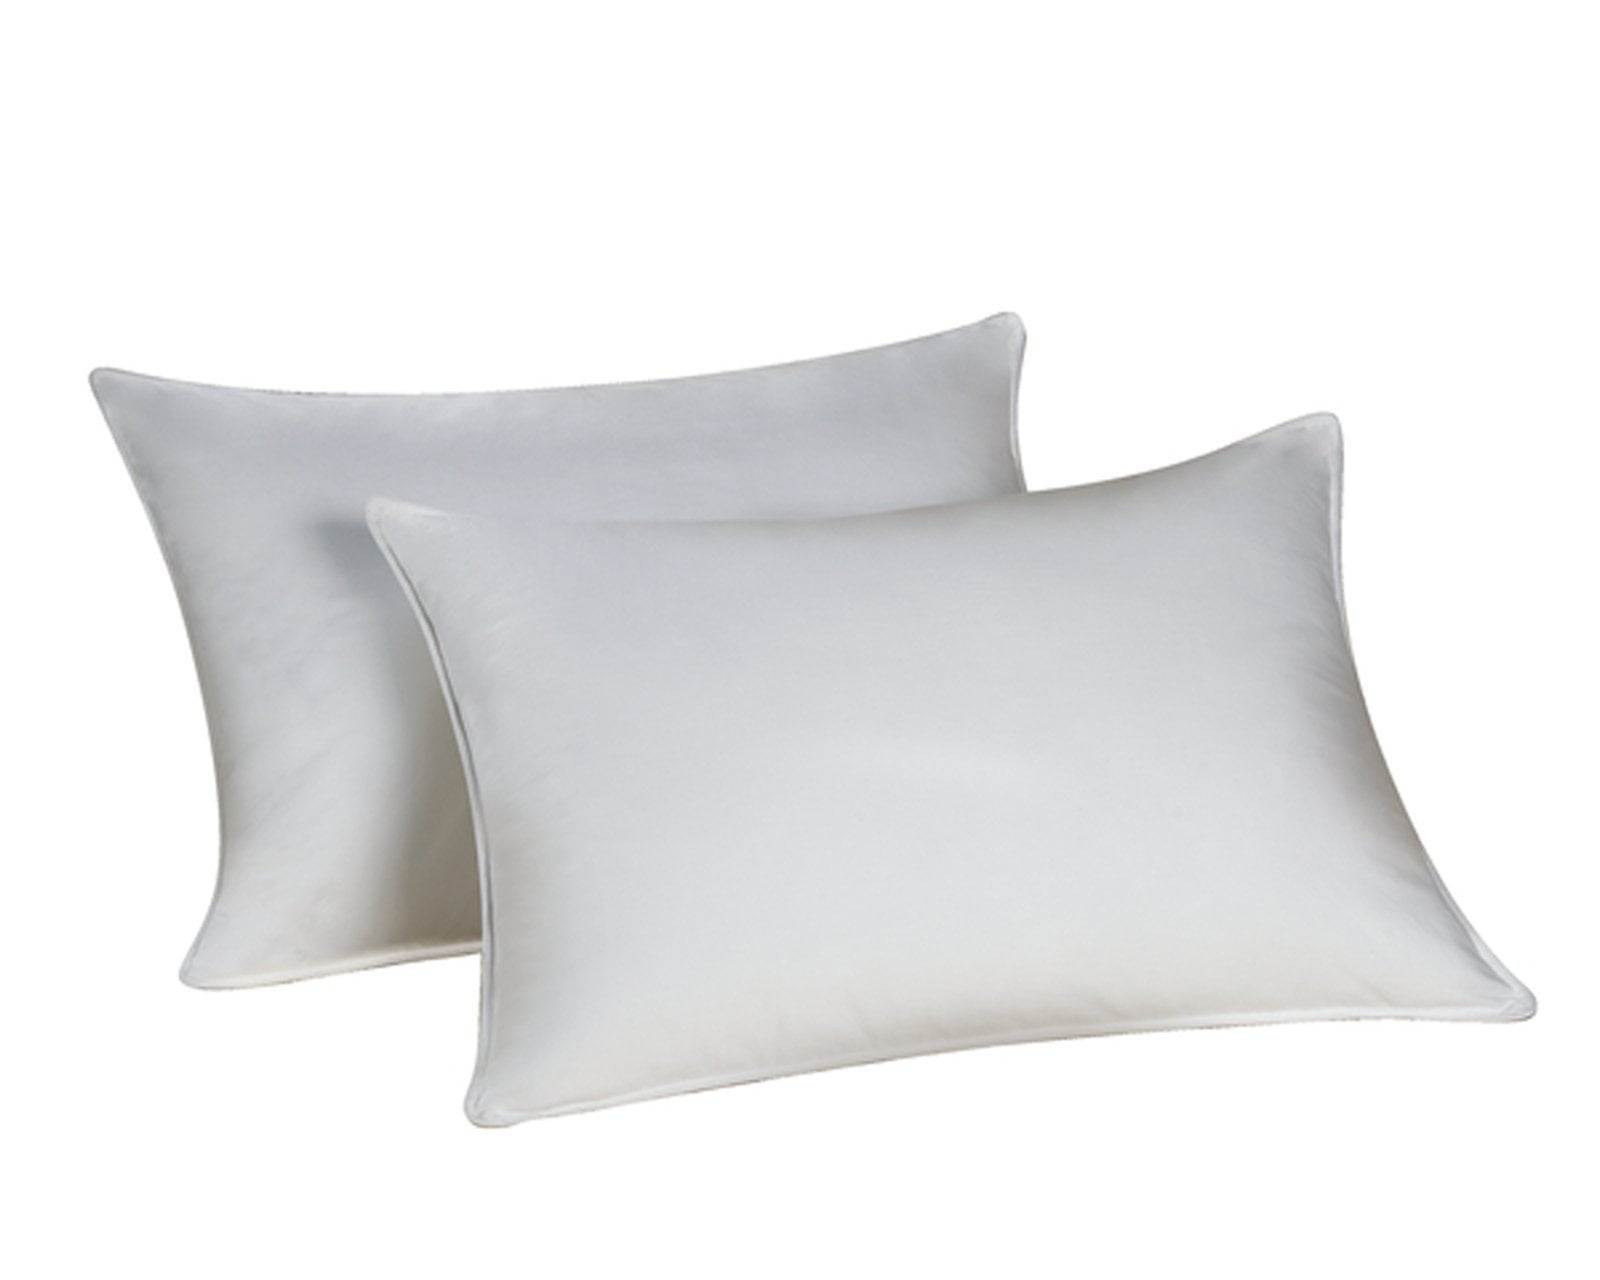 1 Pillow Envirosleep Dream Surrender Two Jumbo Pillow found at MGM 